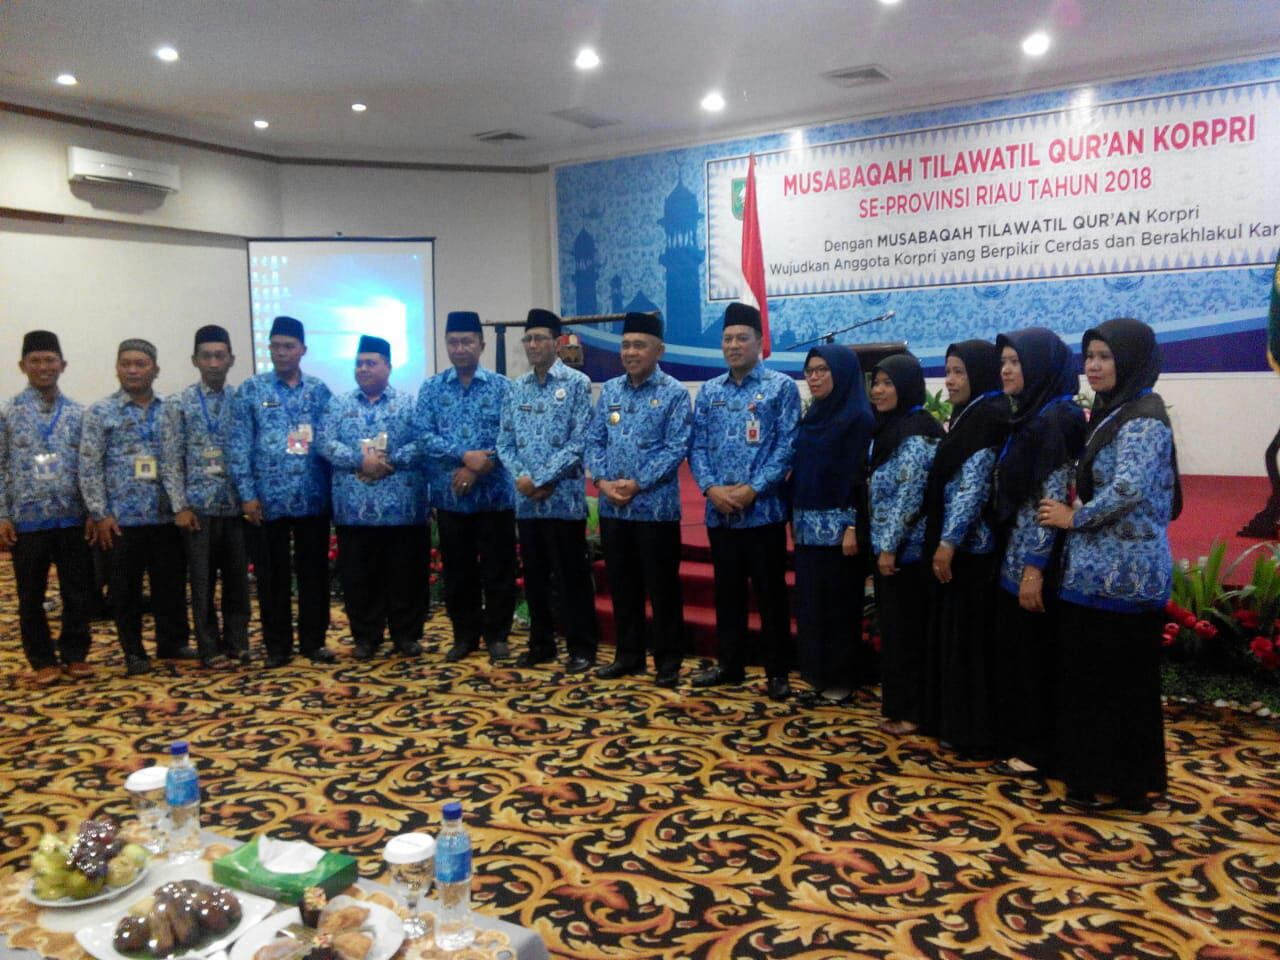 Peserta Musabaqah Tilawatil Quran Korpri II se-Provinsi Riau